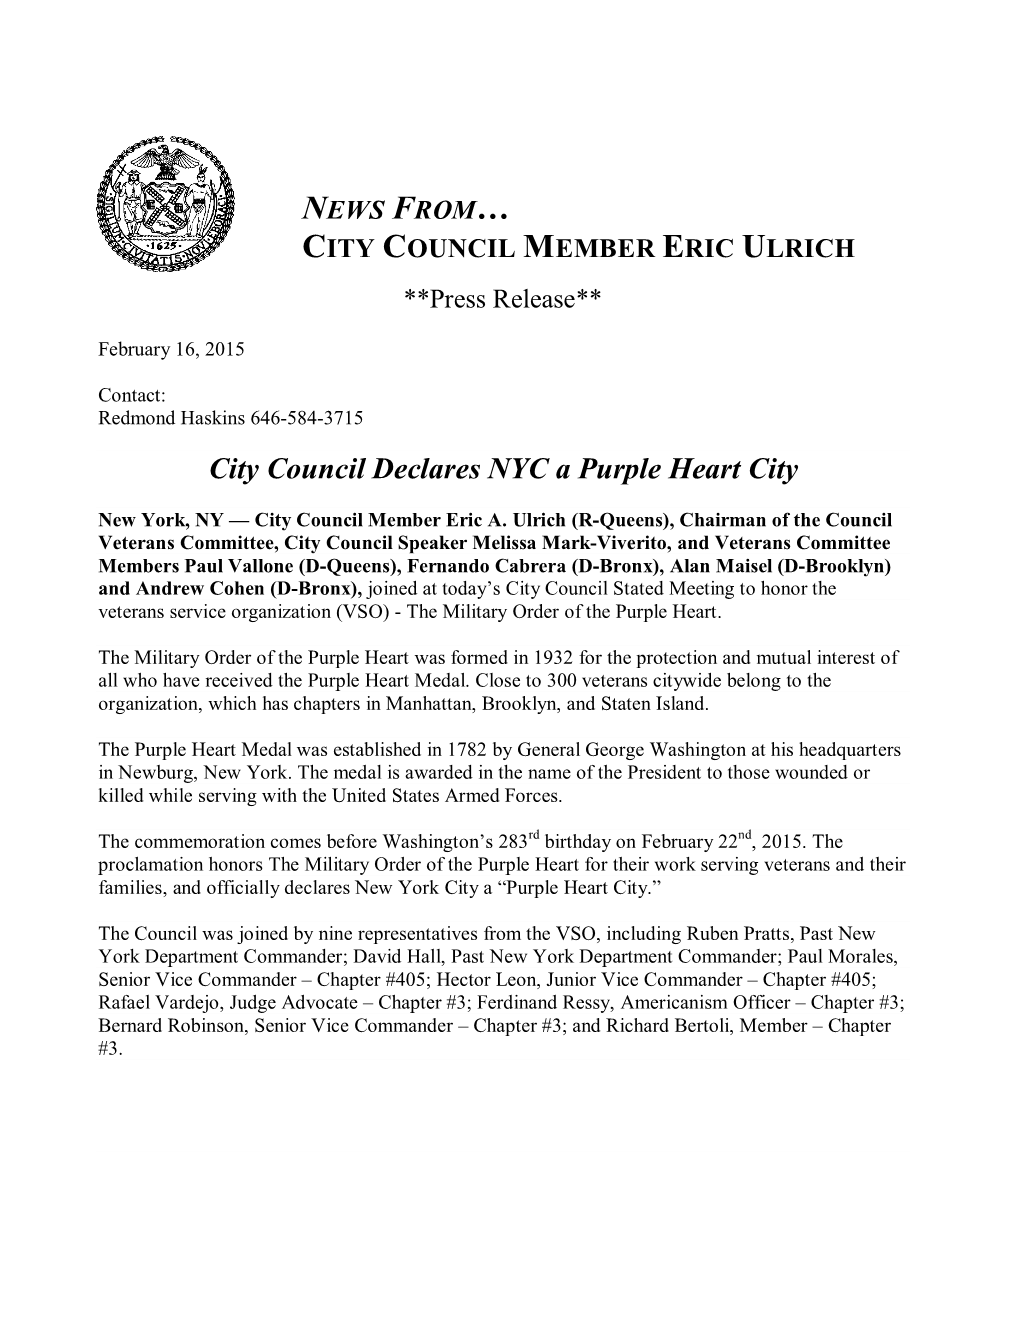 City Council Declares NYC a Purple Heart City